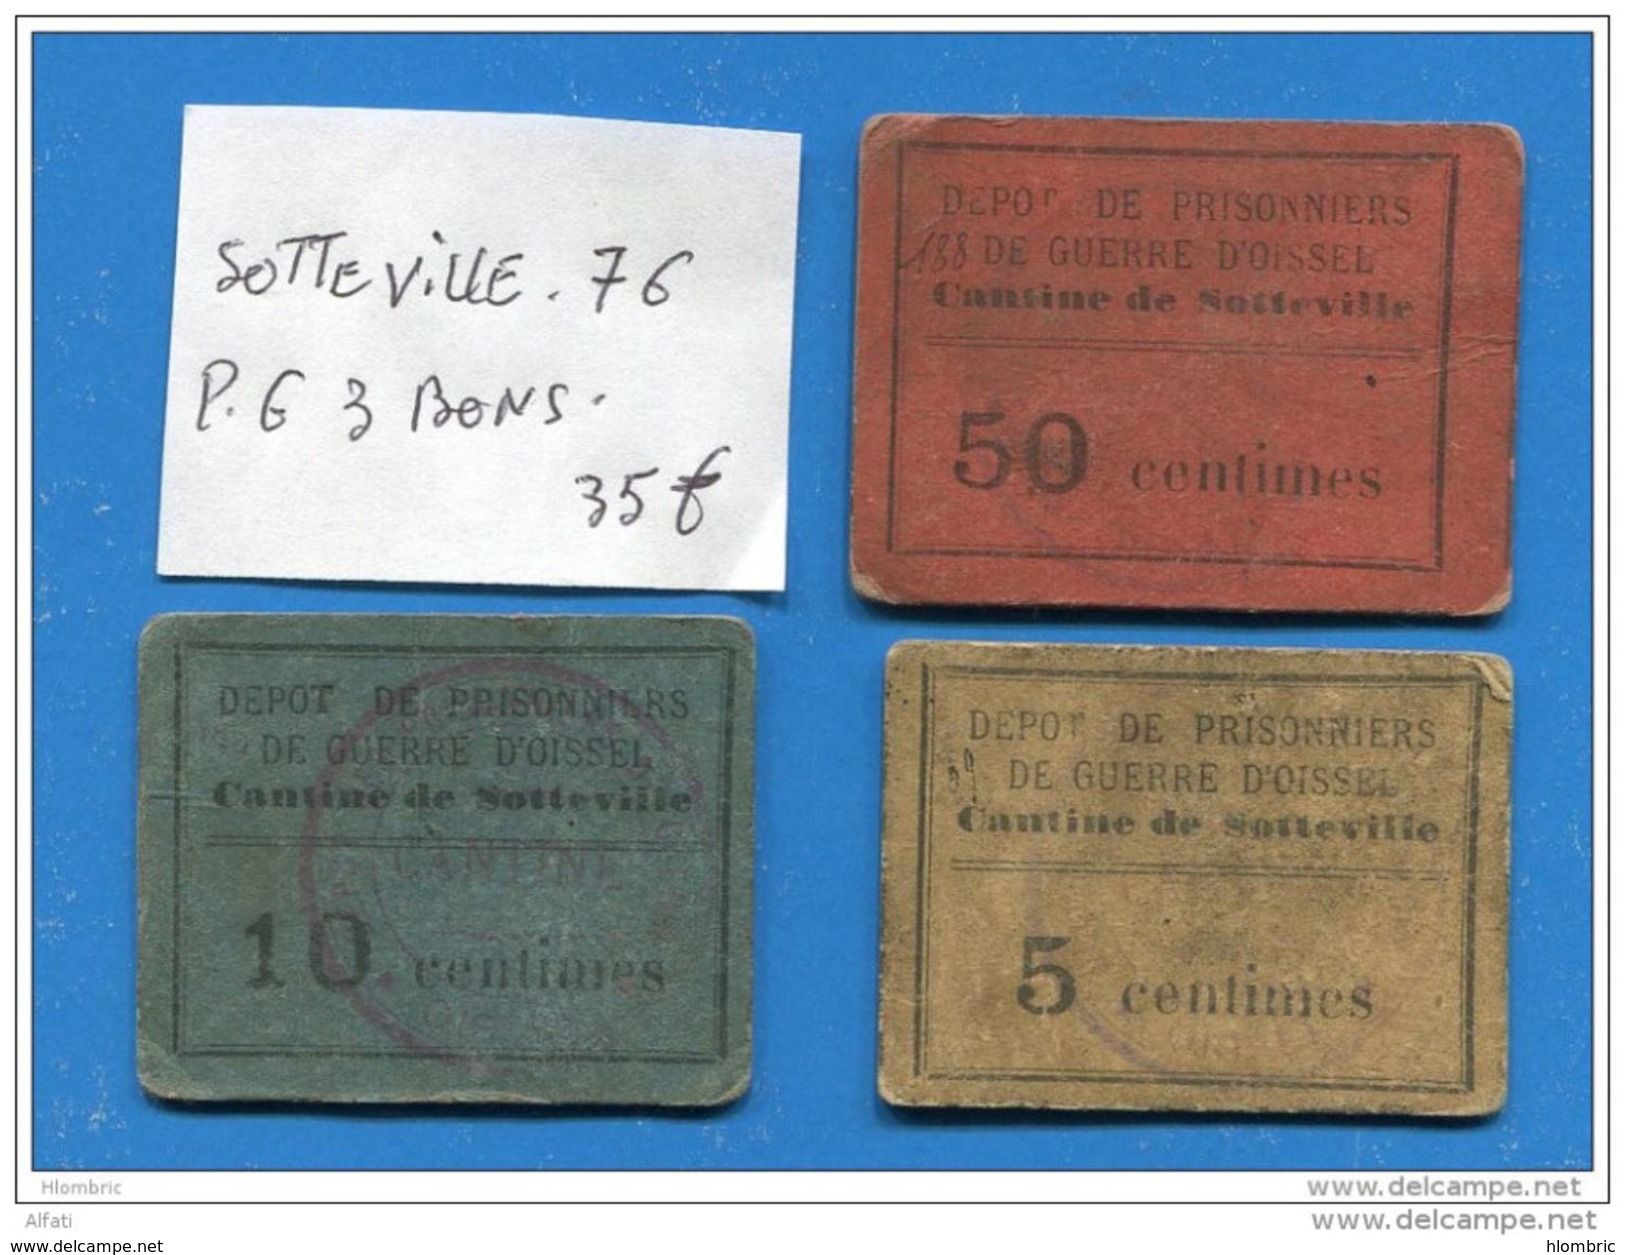 Sotteville  76  Pg  3  Bons  1914/18 - Bonds & Basic Needs